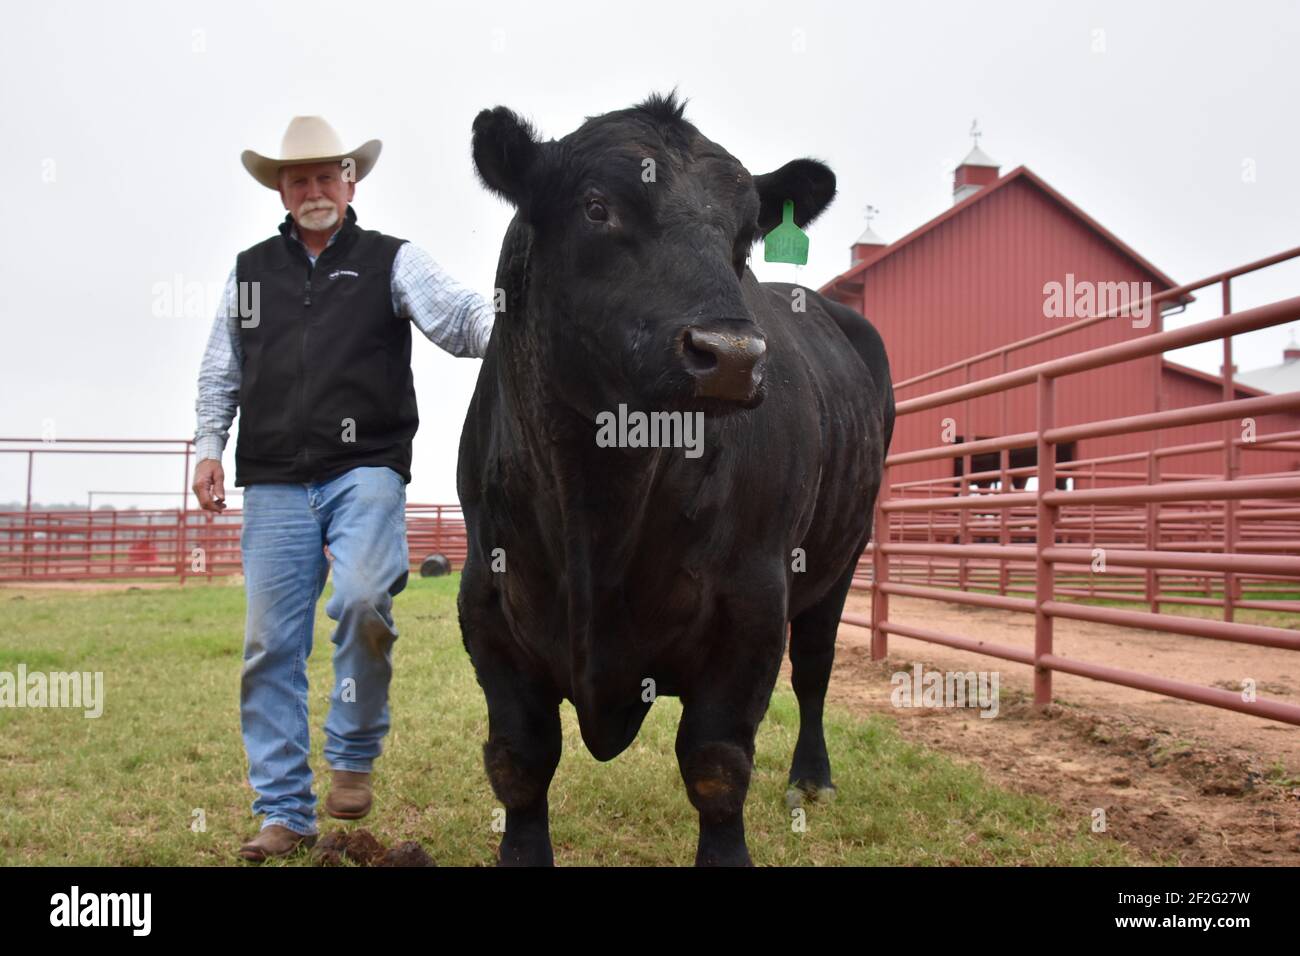 44 Farms, Cameron, Texas, États-Unis Banque D'Images